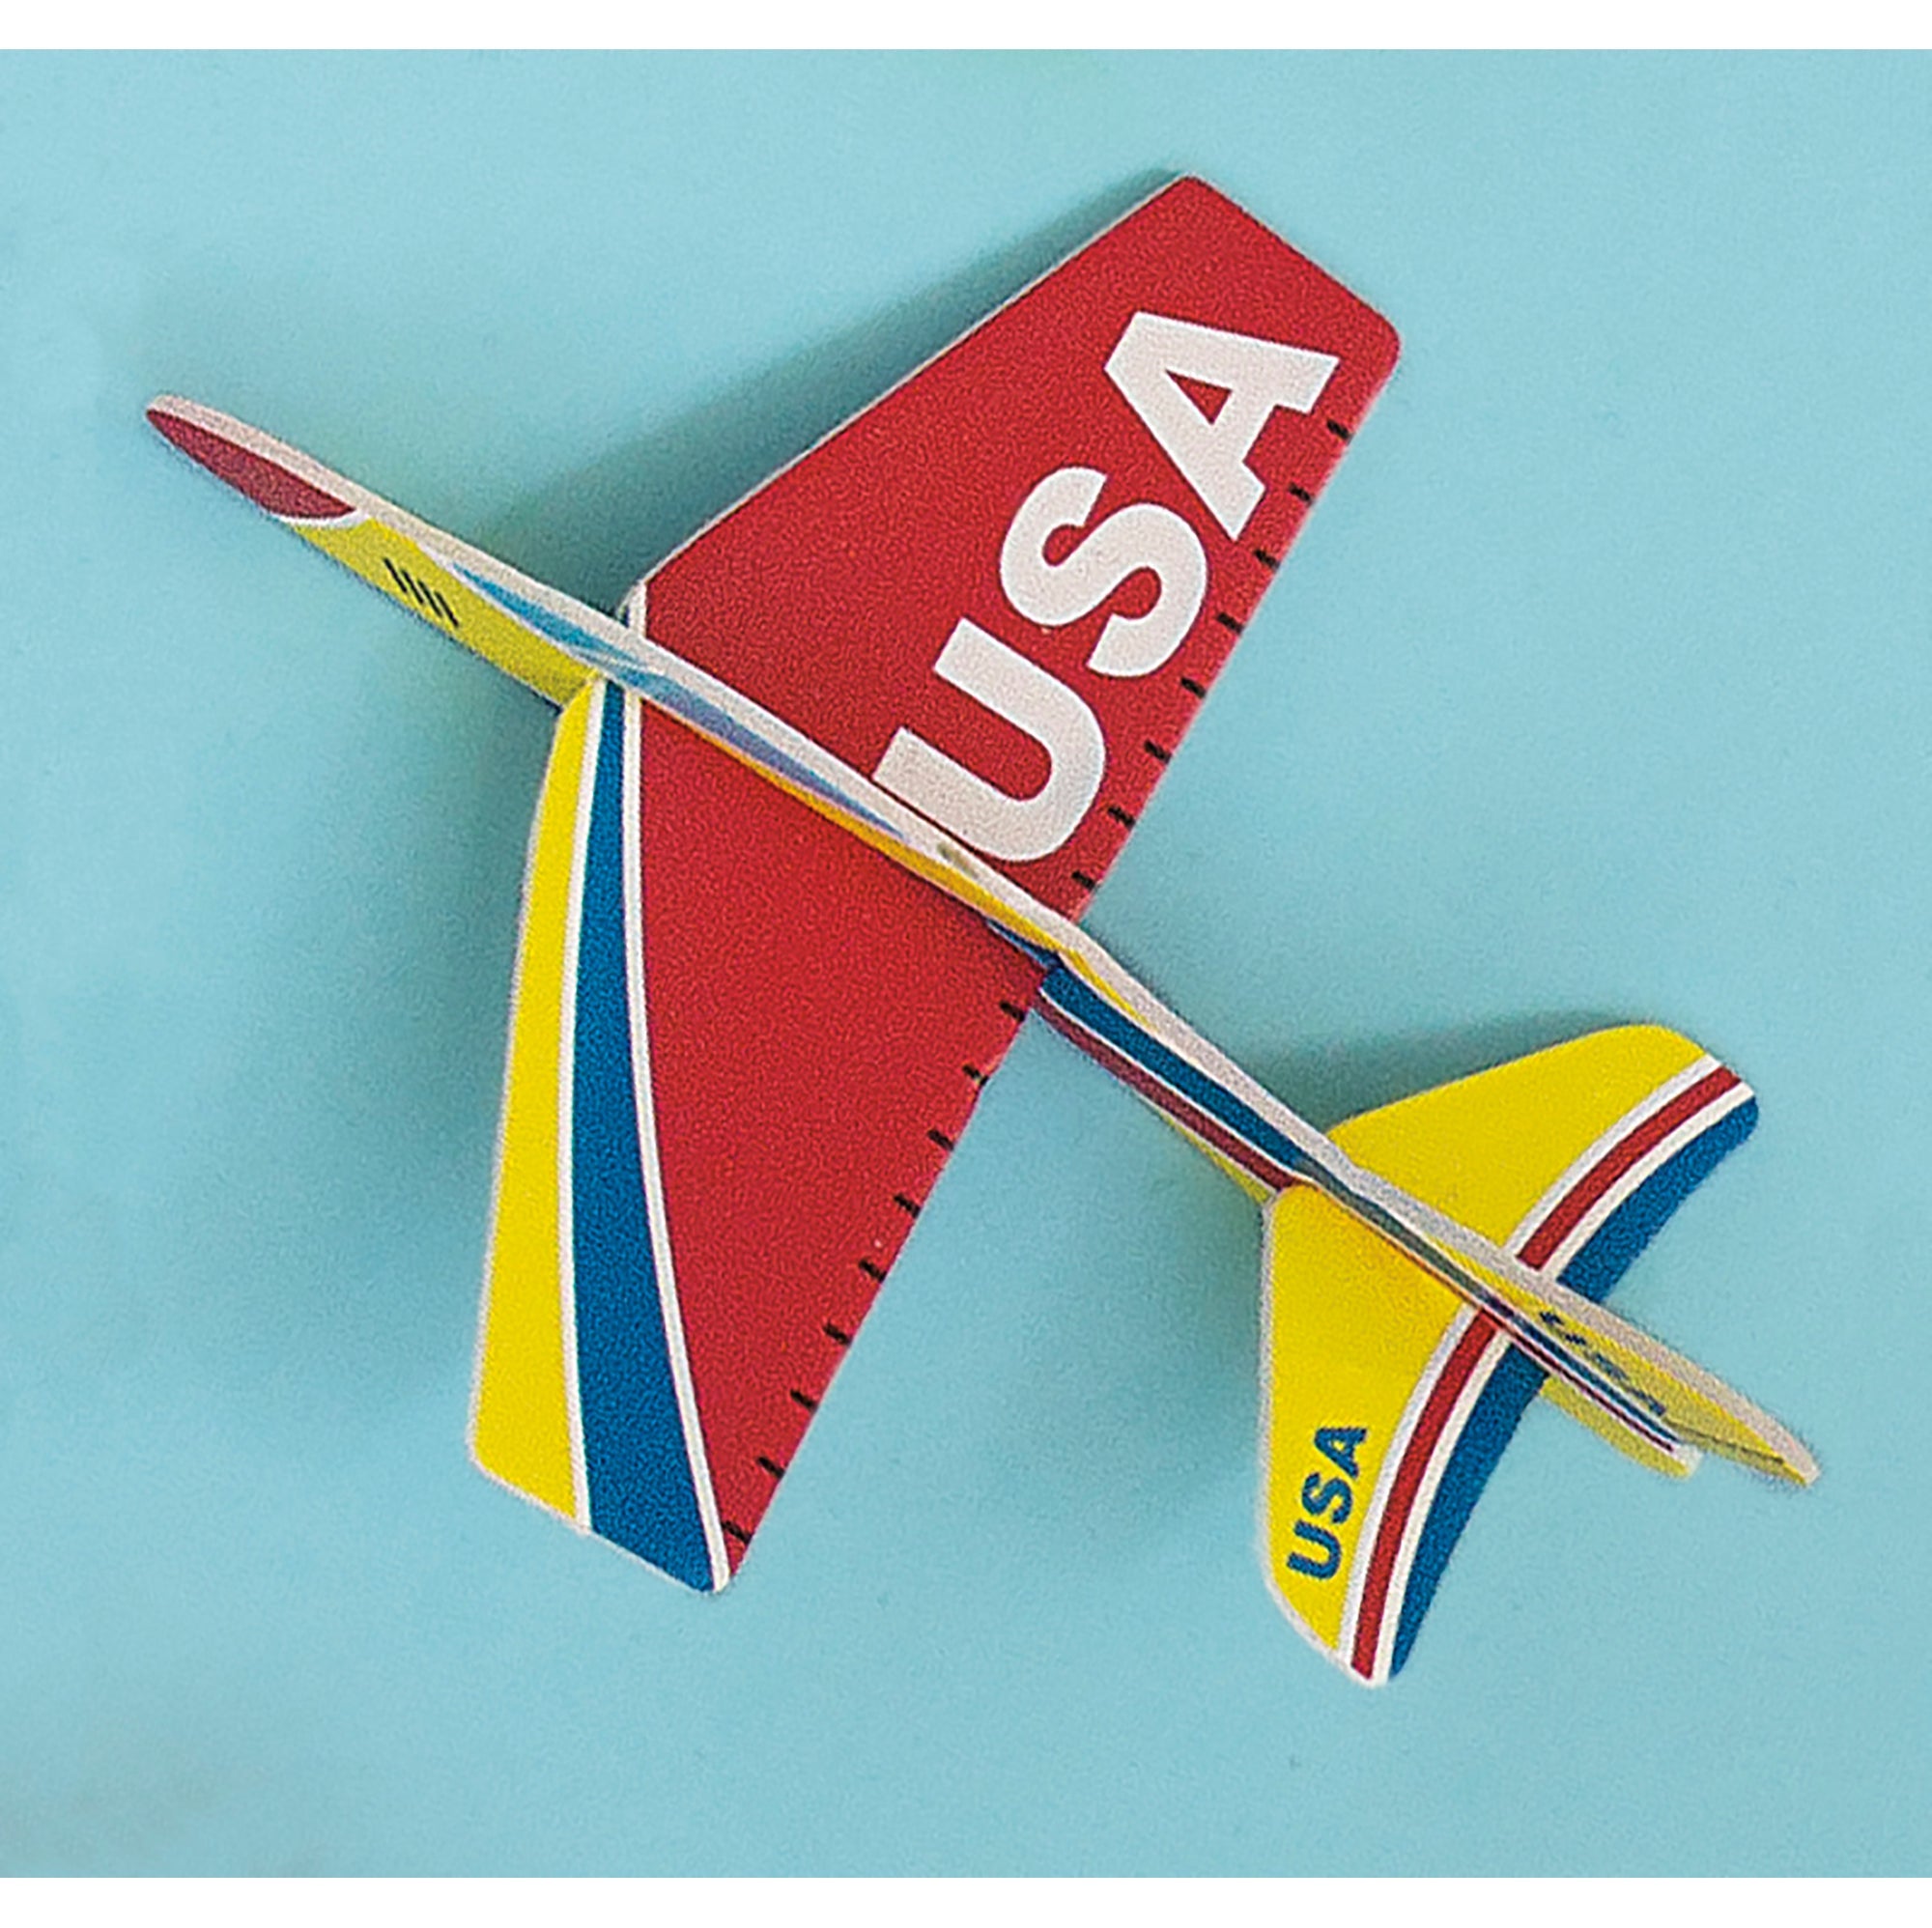 8 Airplane Glider Kits 5x4.25in 